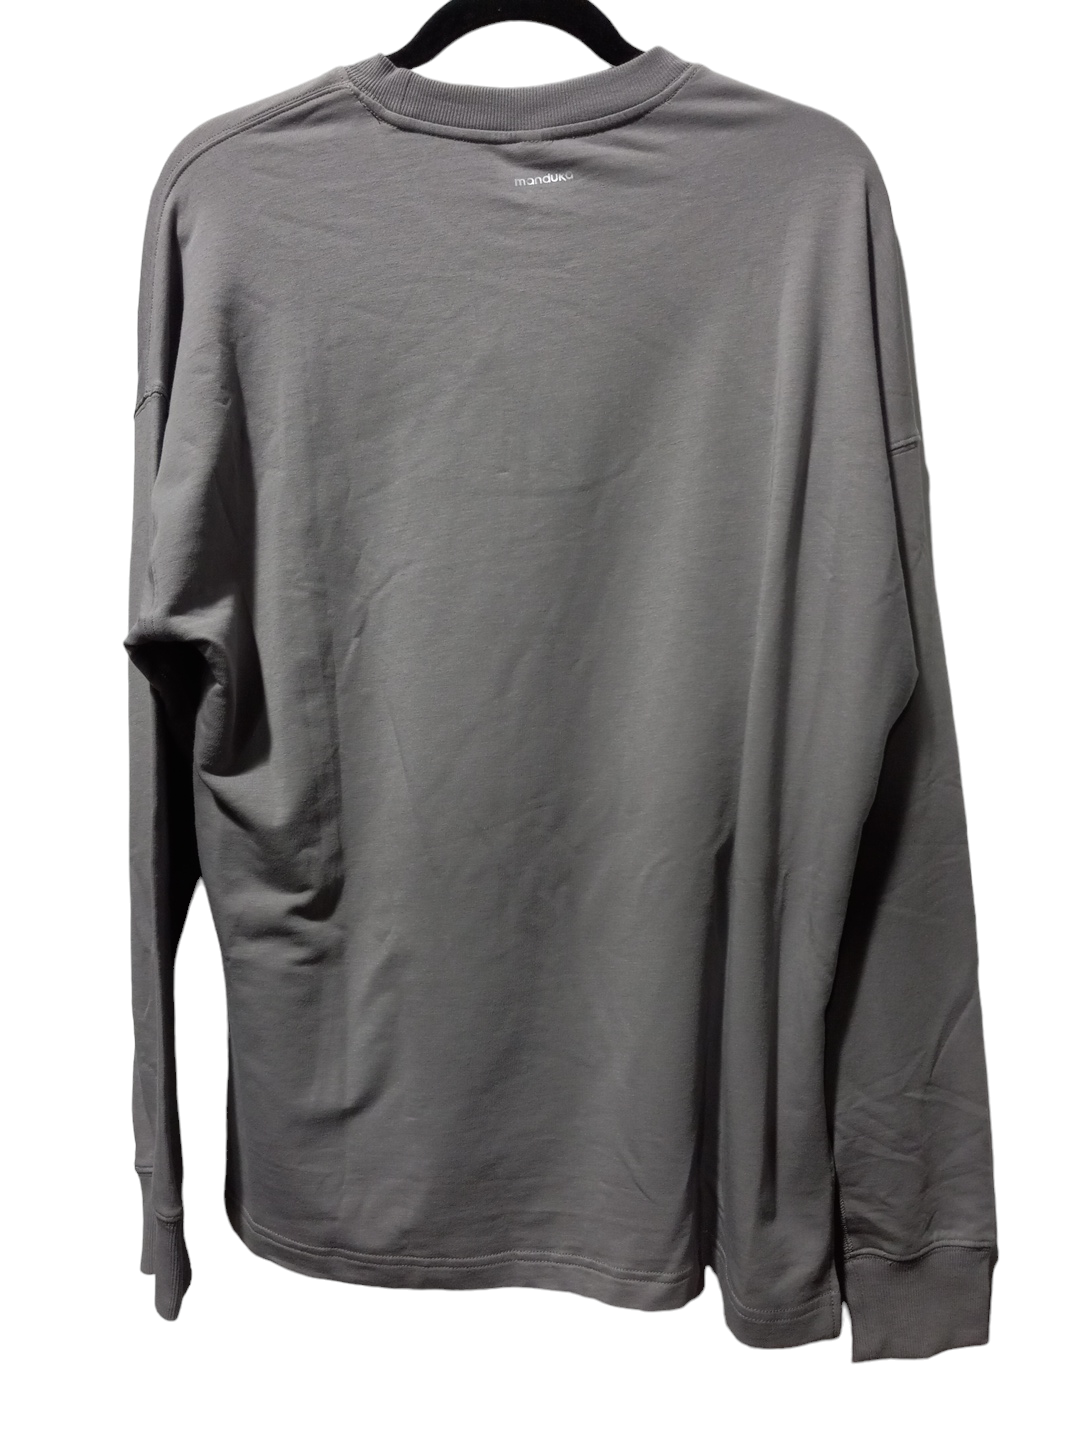 Grey Athletic Top Long Sleeve Crewneck Clothes Mentor, Size L